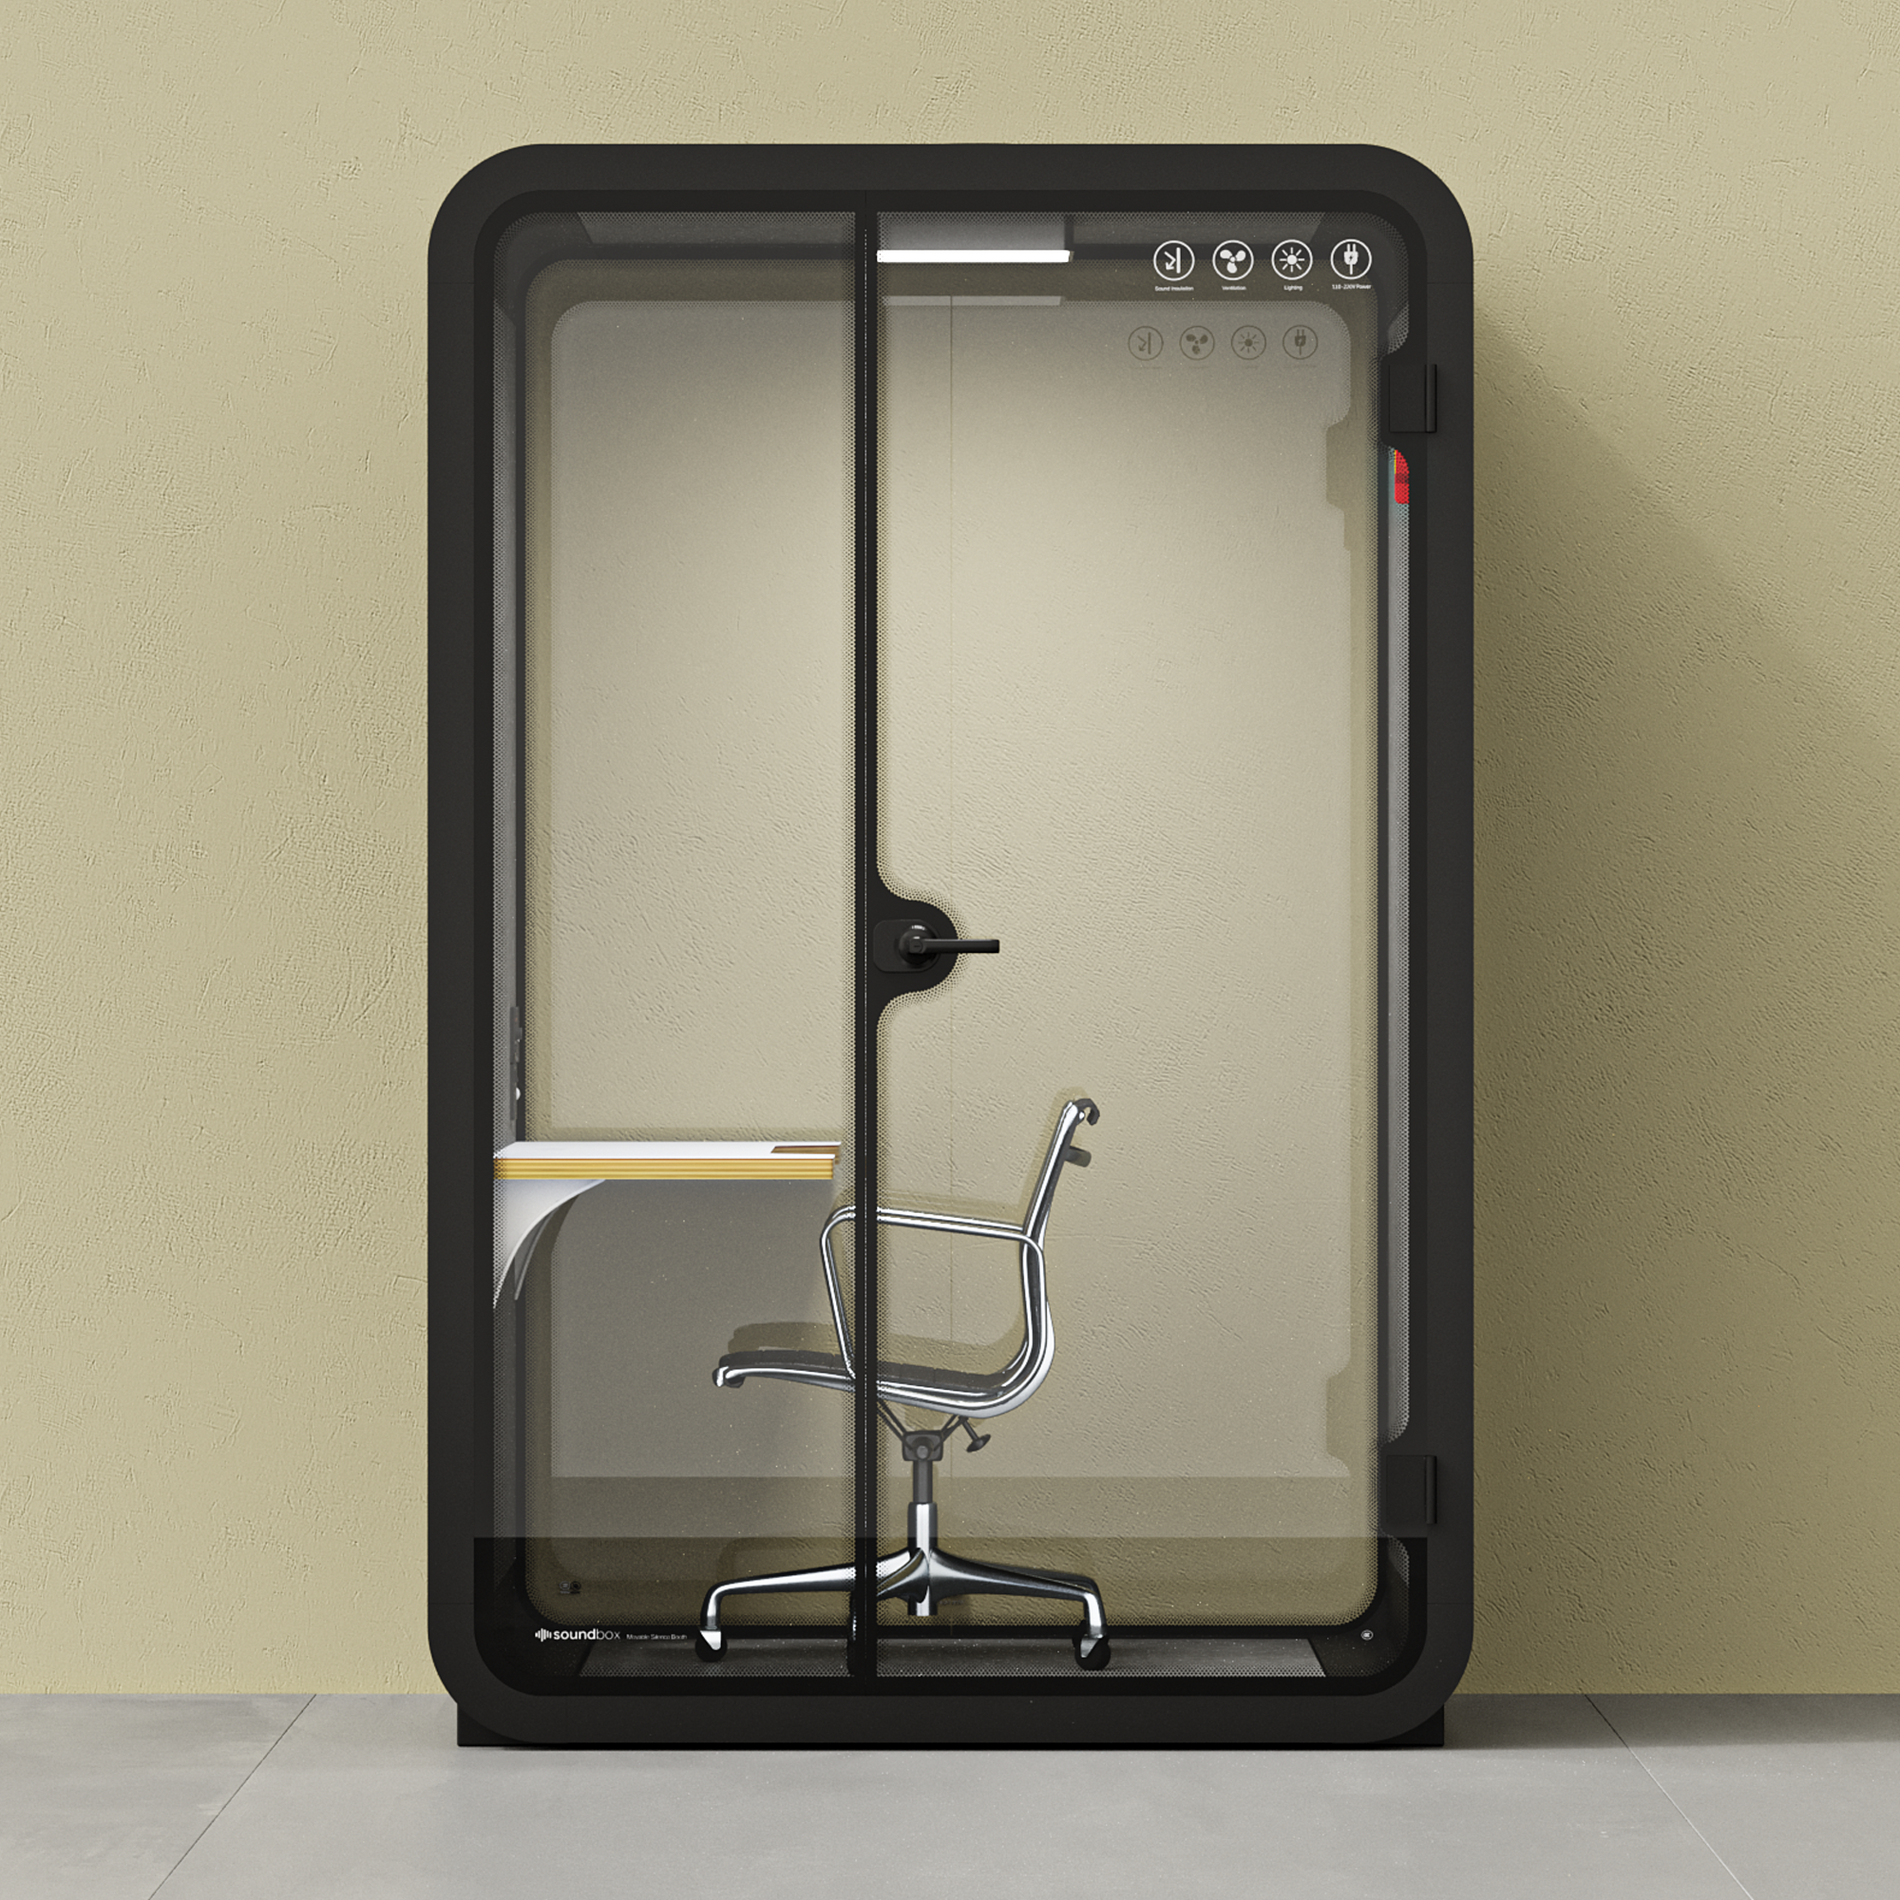 Quell - Office Pod - 2 PersonBlack / Dark Gray / Work Station + Designer Office Chair